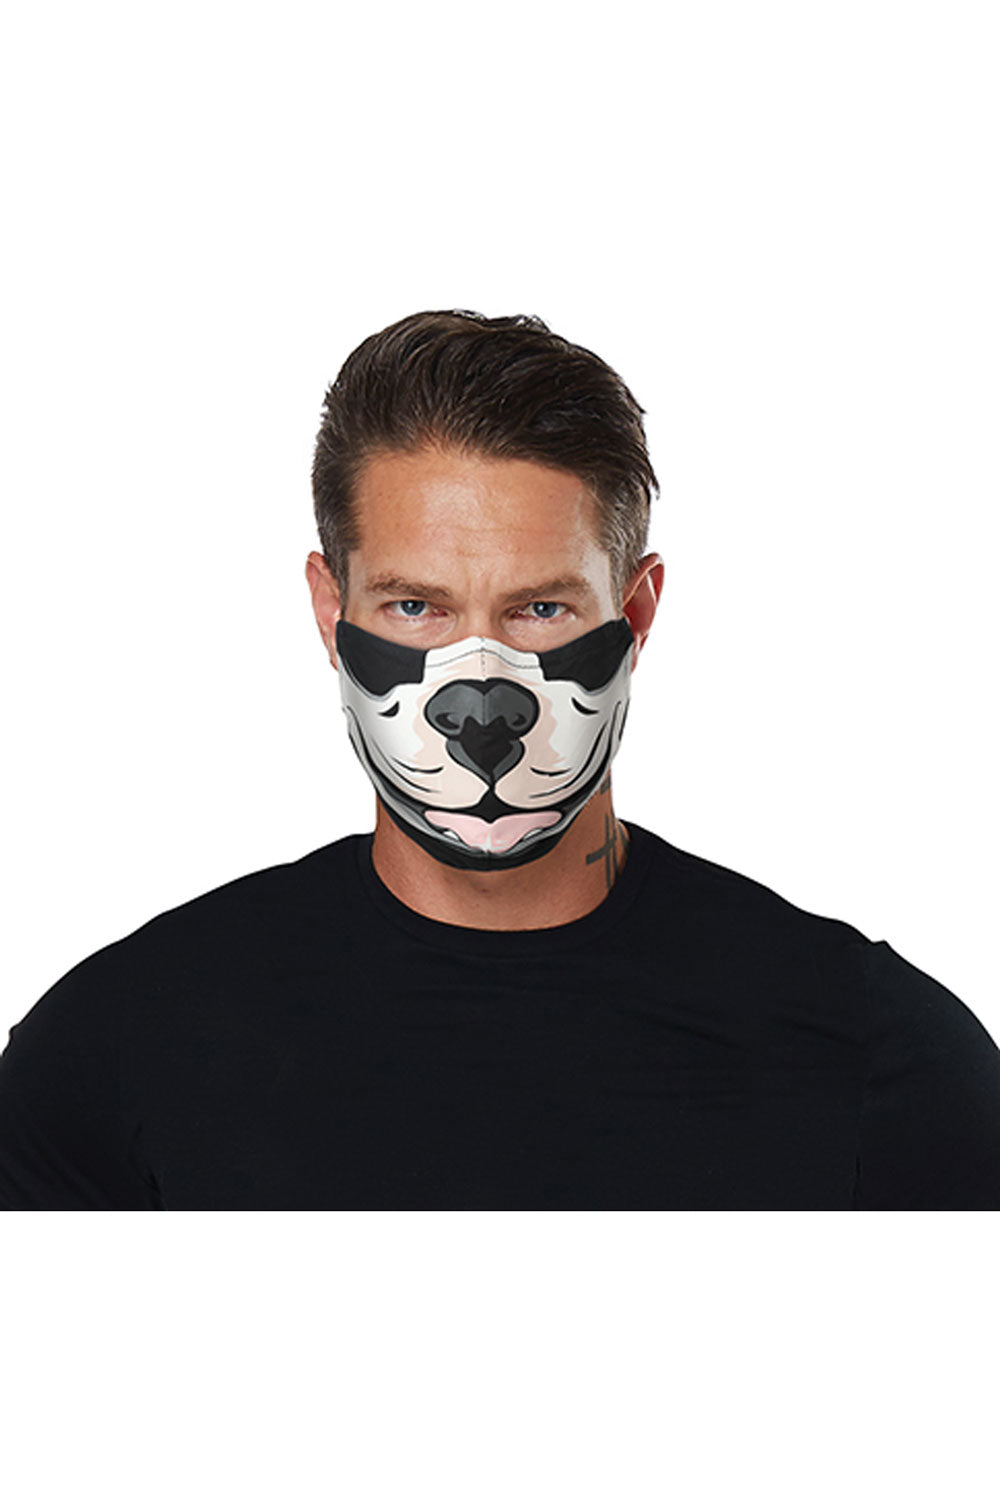 Dog Face Mask California Costume 6220-150